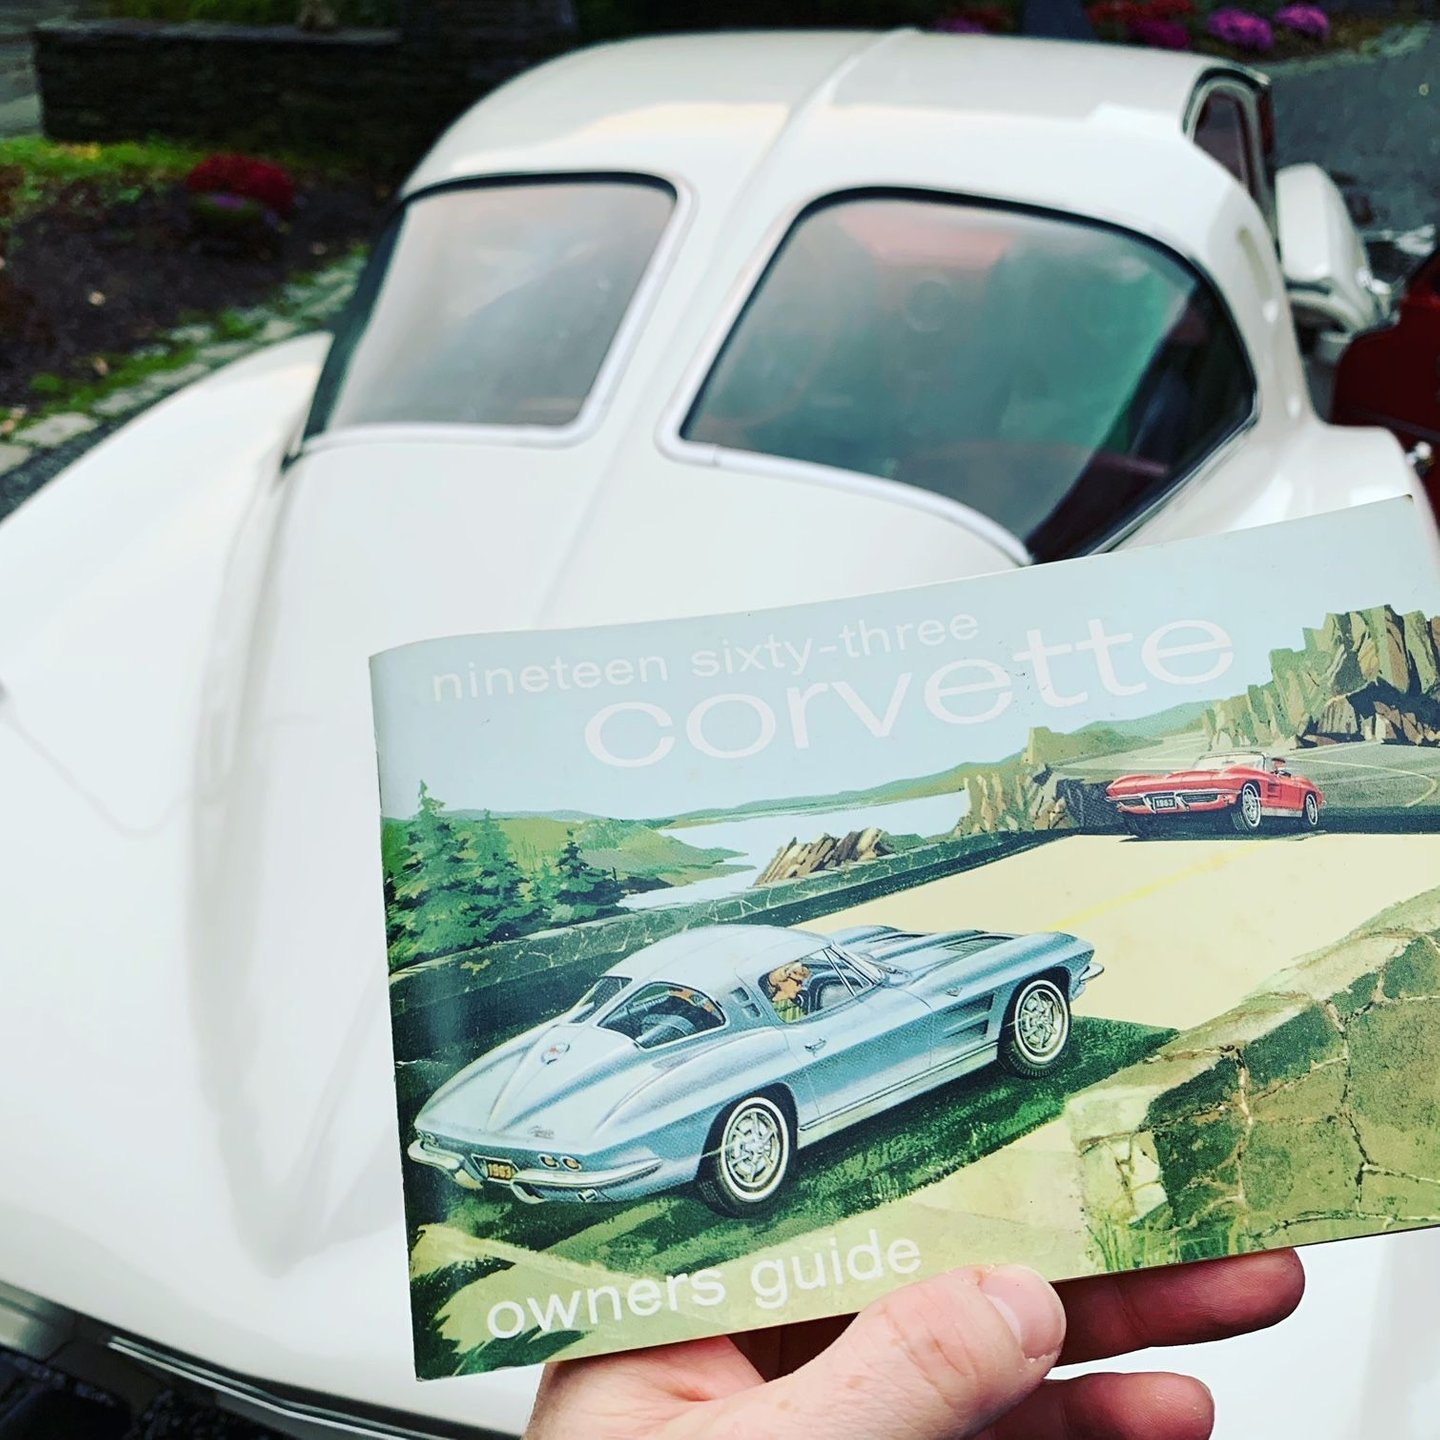 1963 chevrolet corvette split window coupe